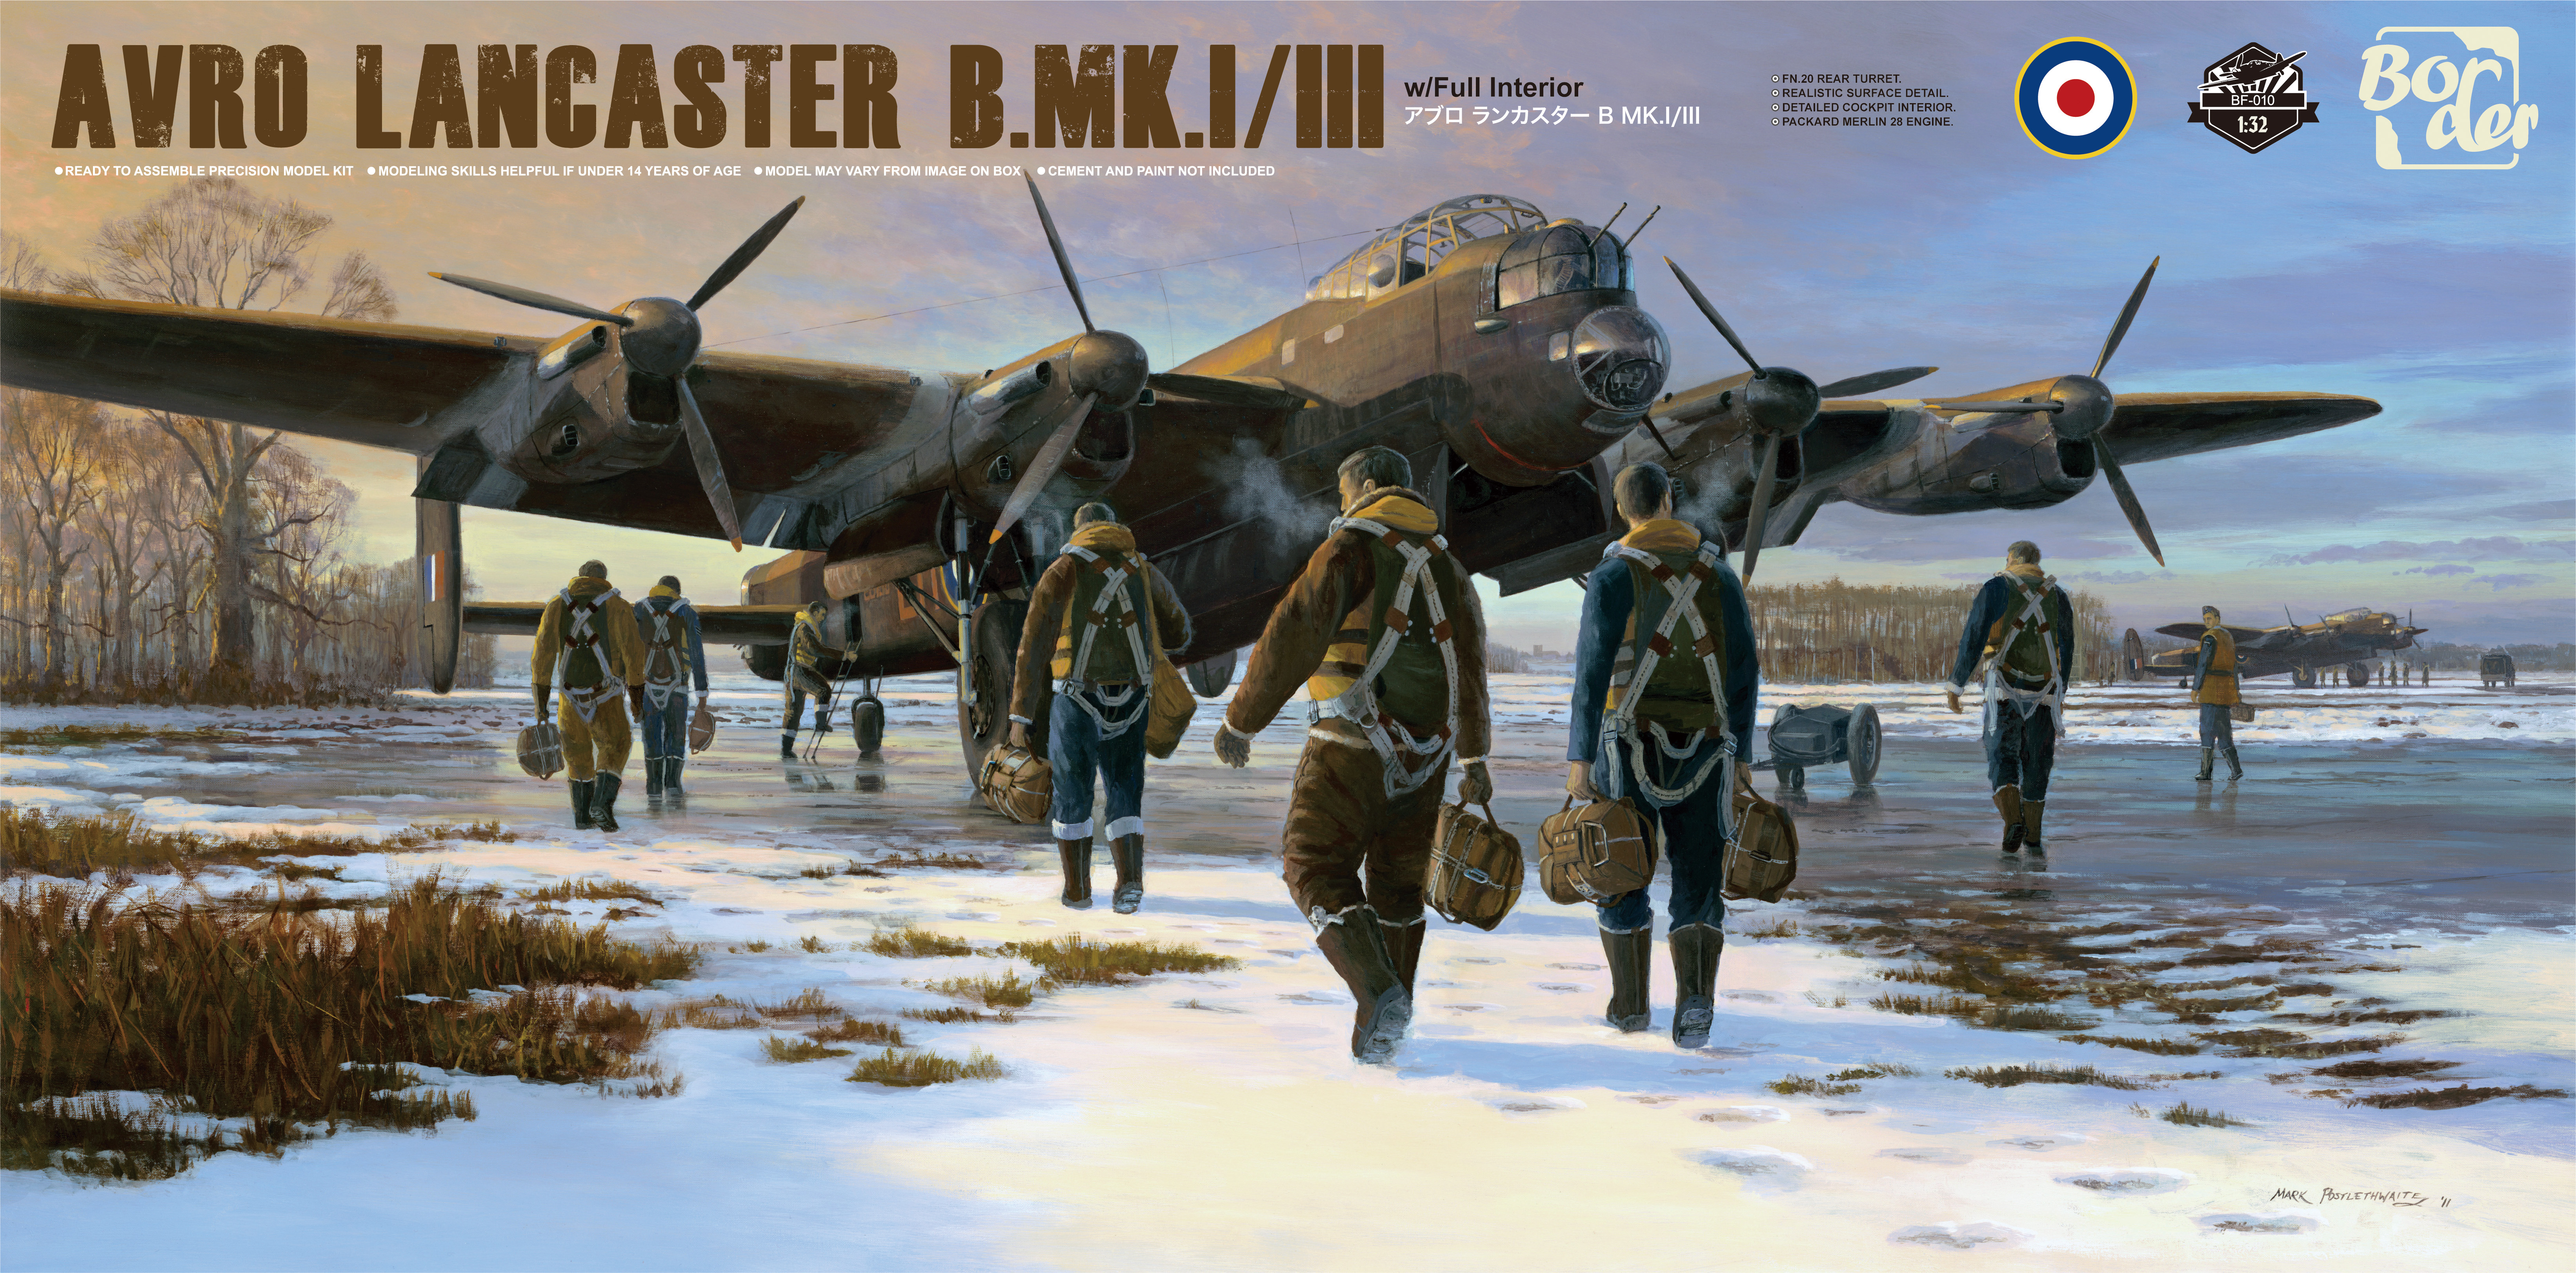 BF-010  авиация  Avro Lancaster B.Mk.I/III w/Full Interior  (1:32)